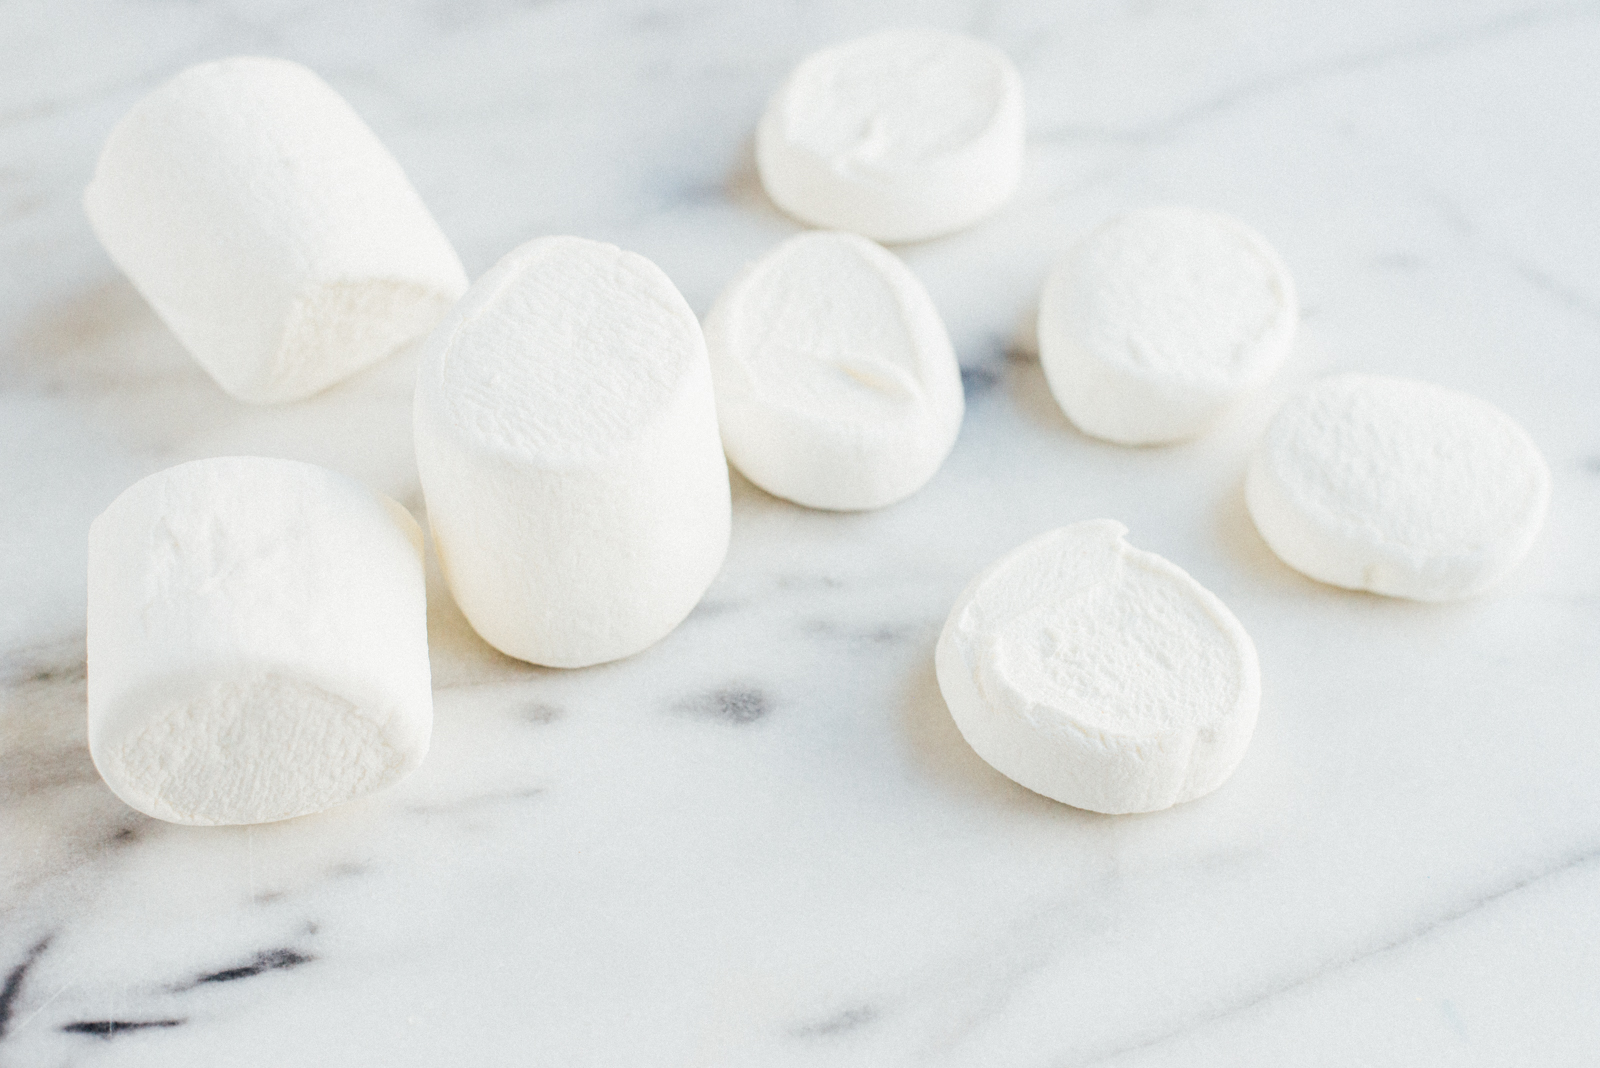 sliced jumbo marshmallows for snowmen faces